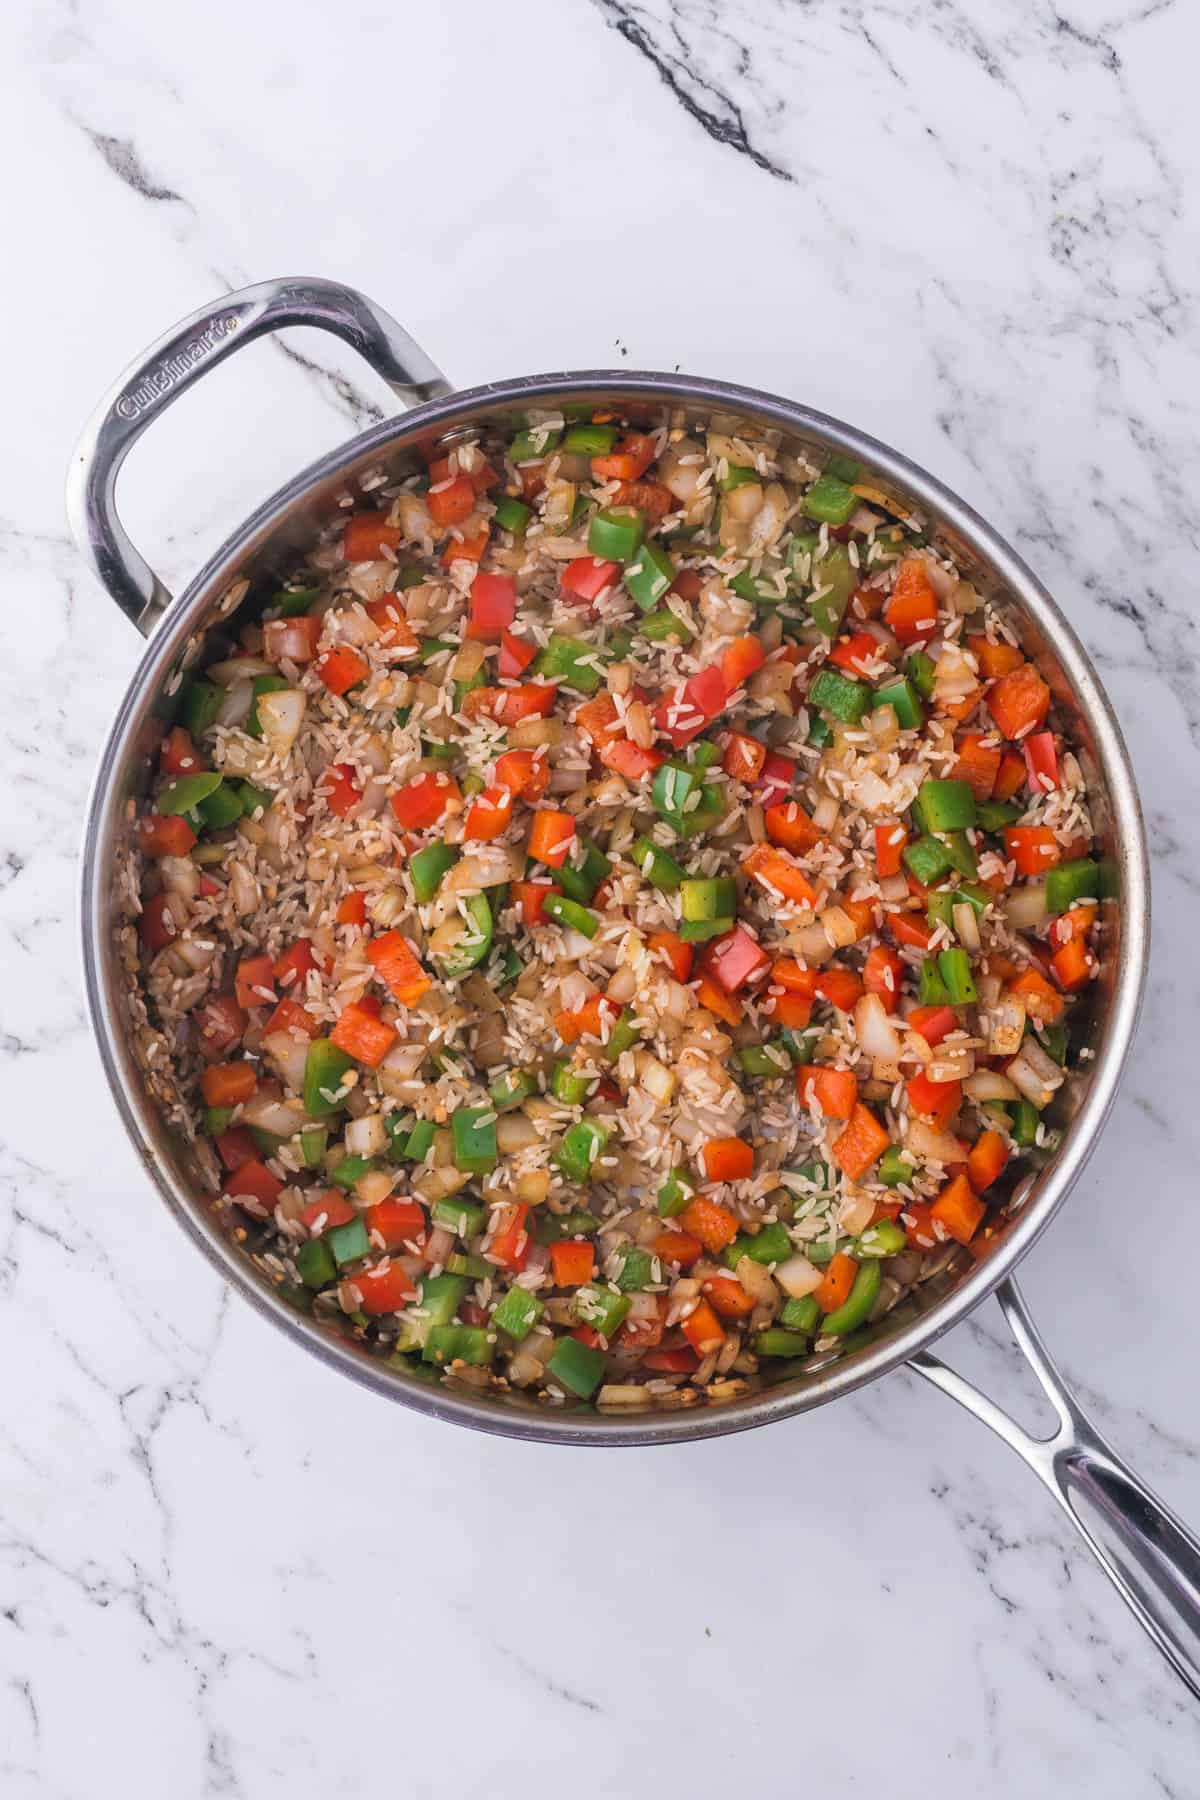 Adding rice to veggies in a pan.